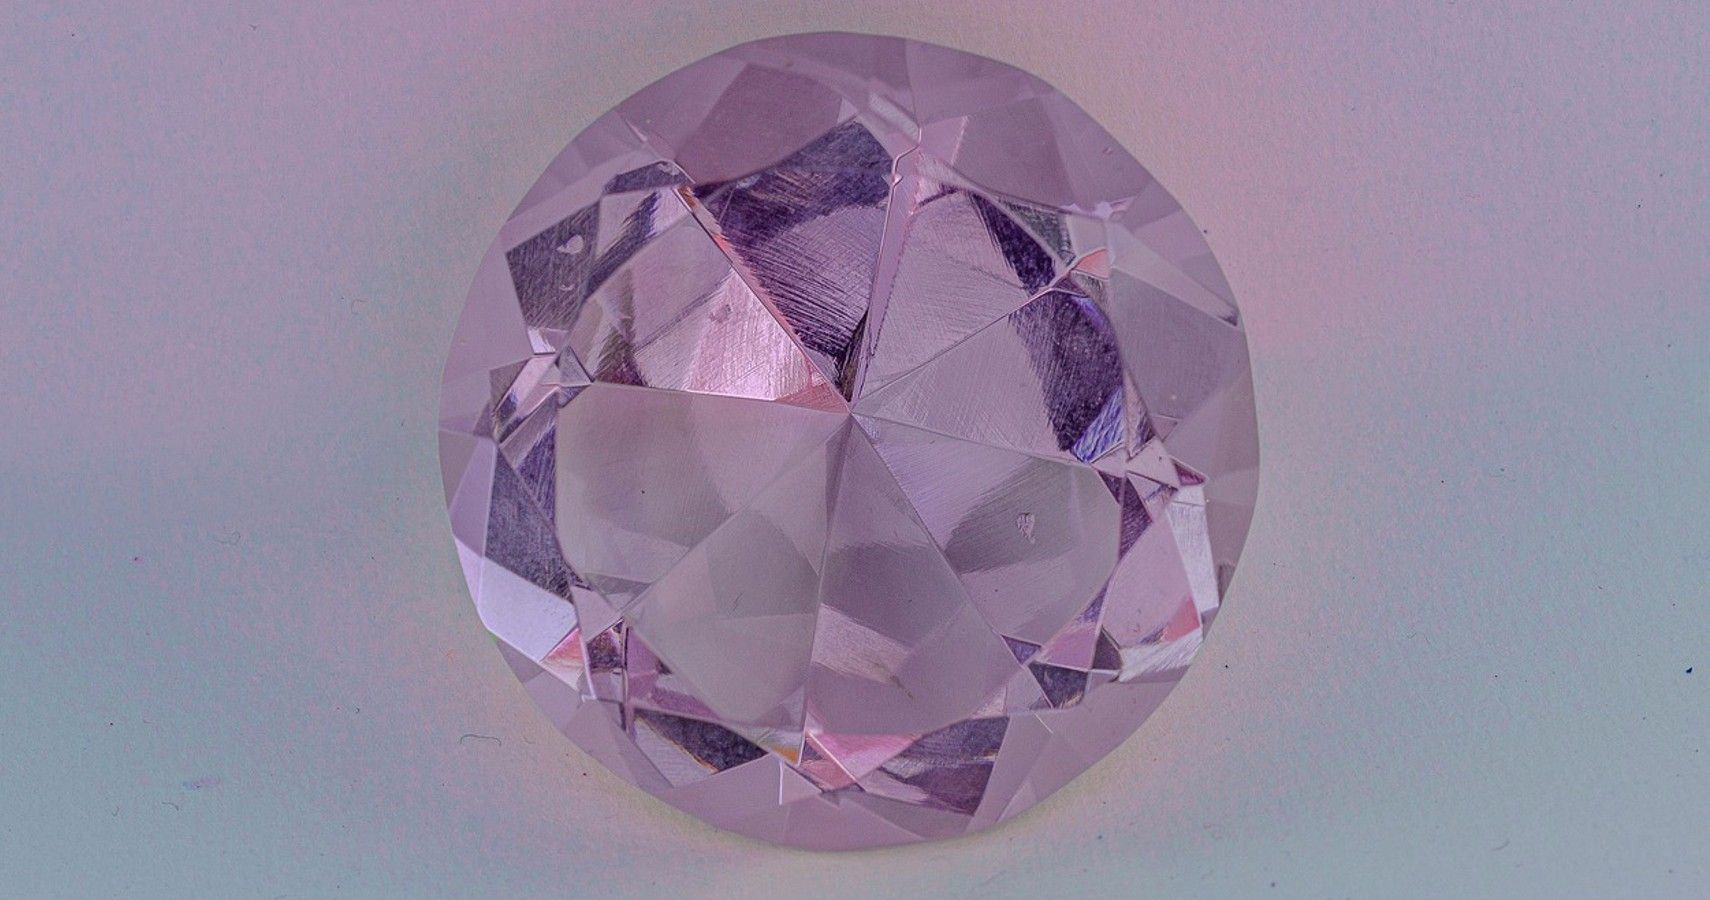 The Fuchsia Rose Diamond Fetches $6.7 Million At Auction